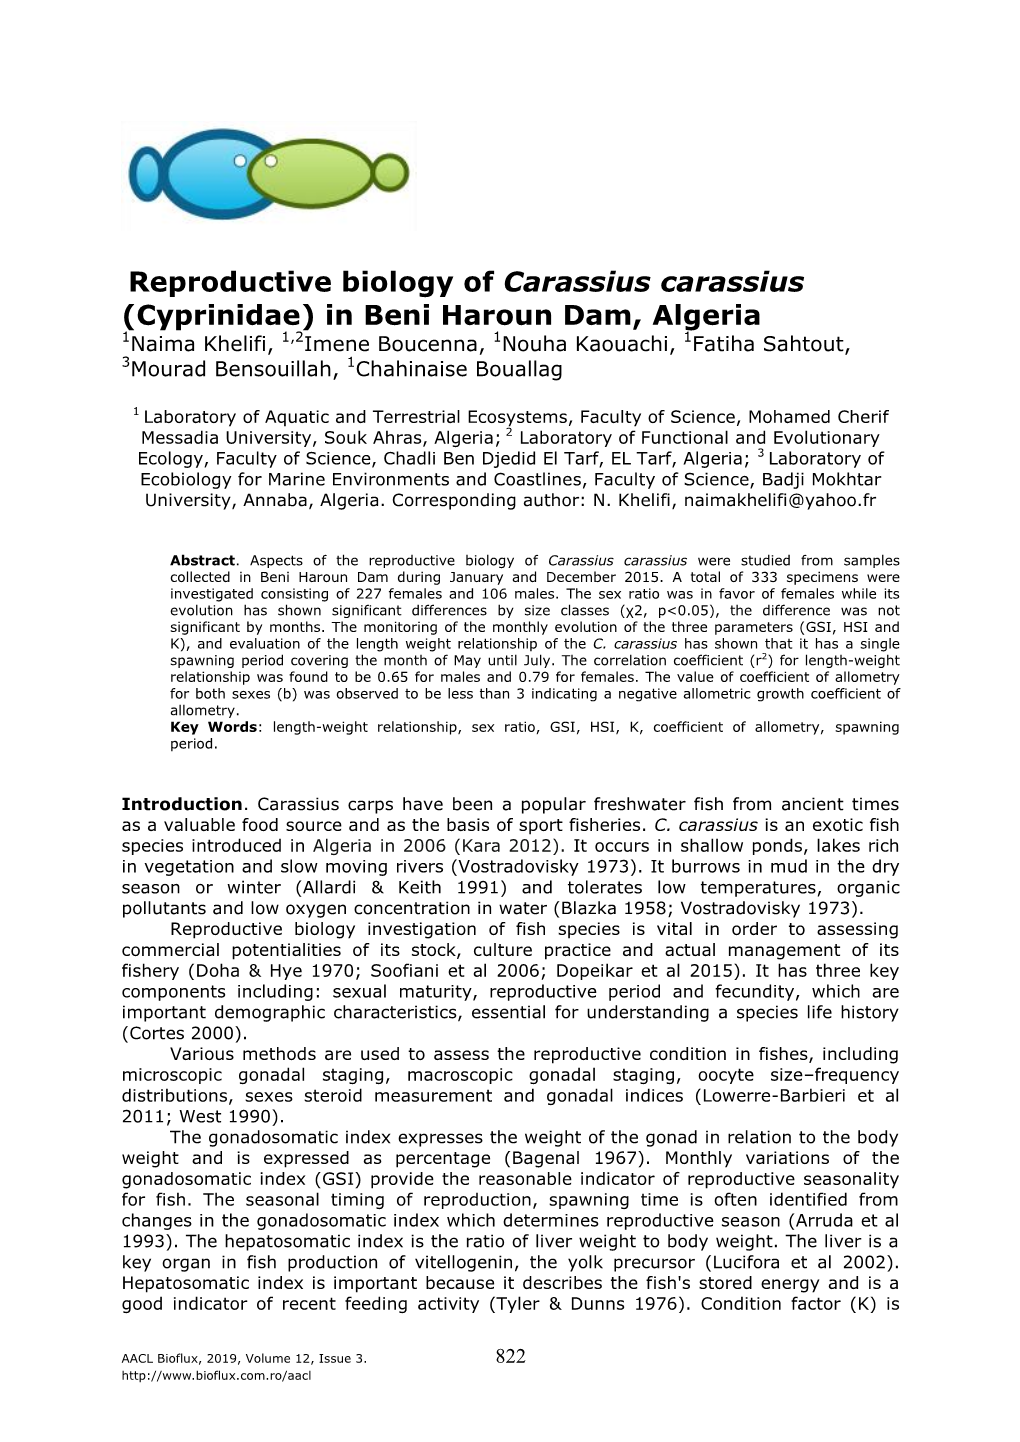 Reproductive Biology of Carassius Carassius (Cyprinidae) in Beni